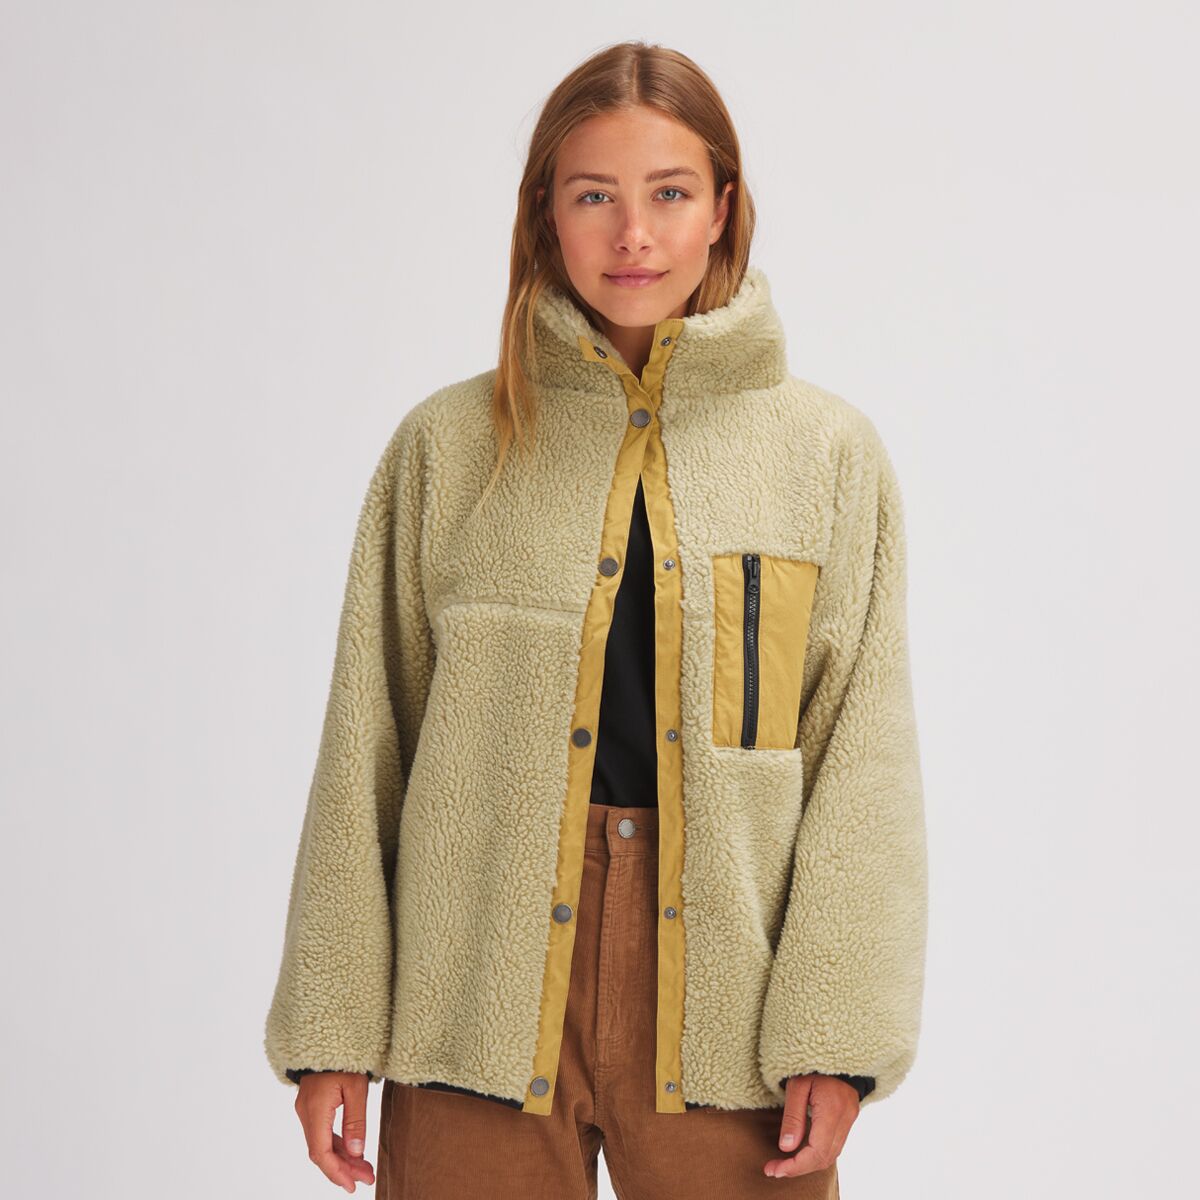 Basin and Range Mixed Fabric Sherpa Jacket - Women's